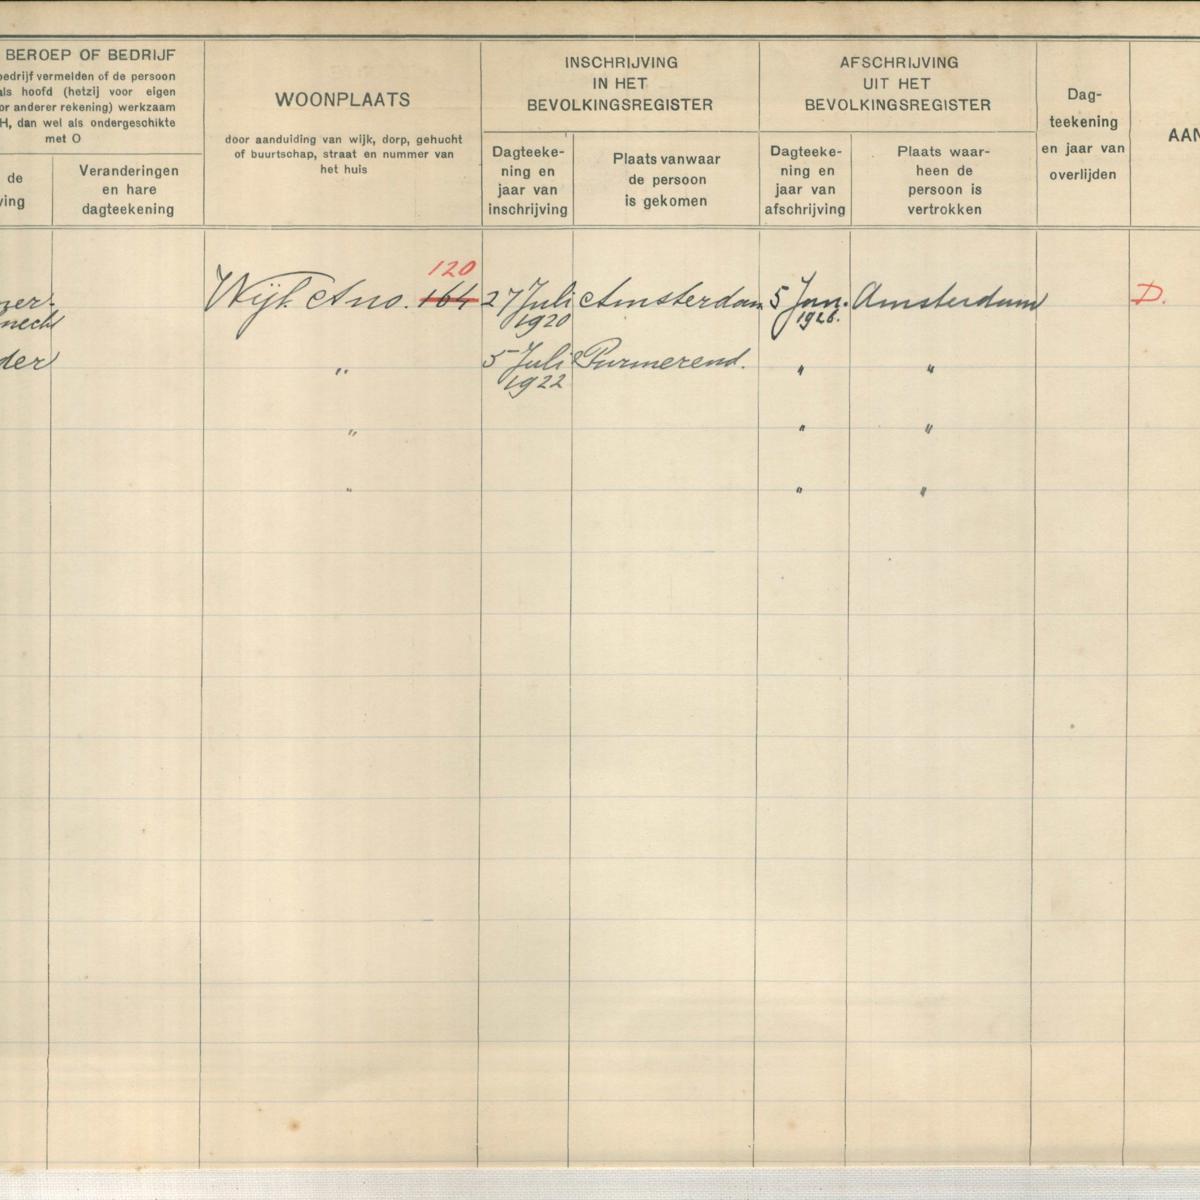 Civil registry, Ilpendam, 1924-1939, 43a-43b, sheet 566 (right)